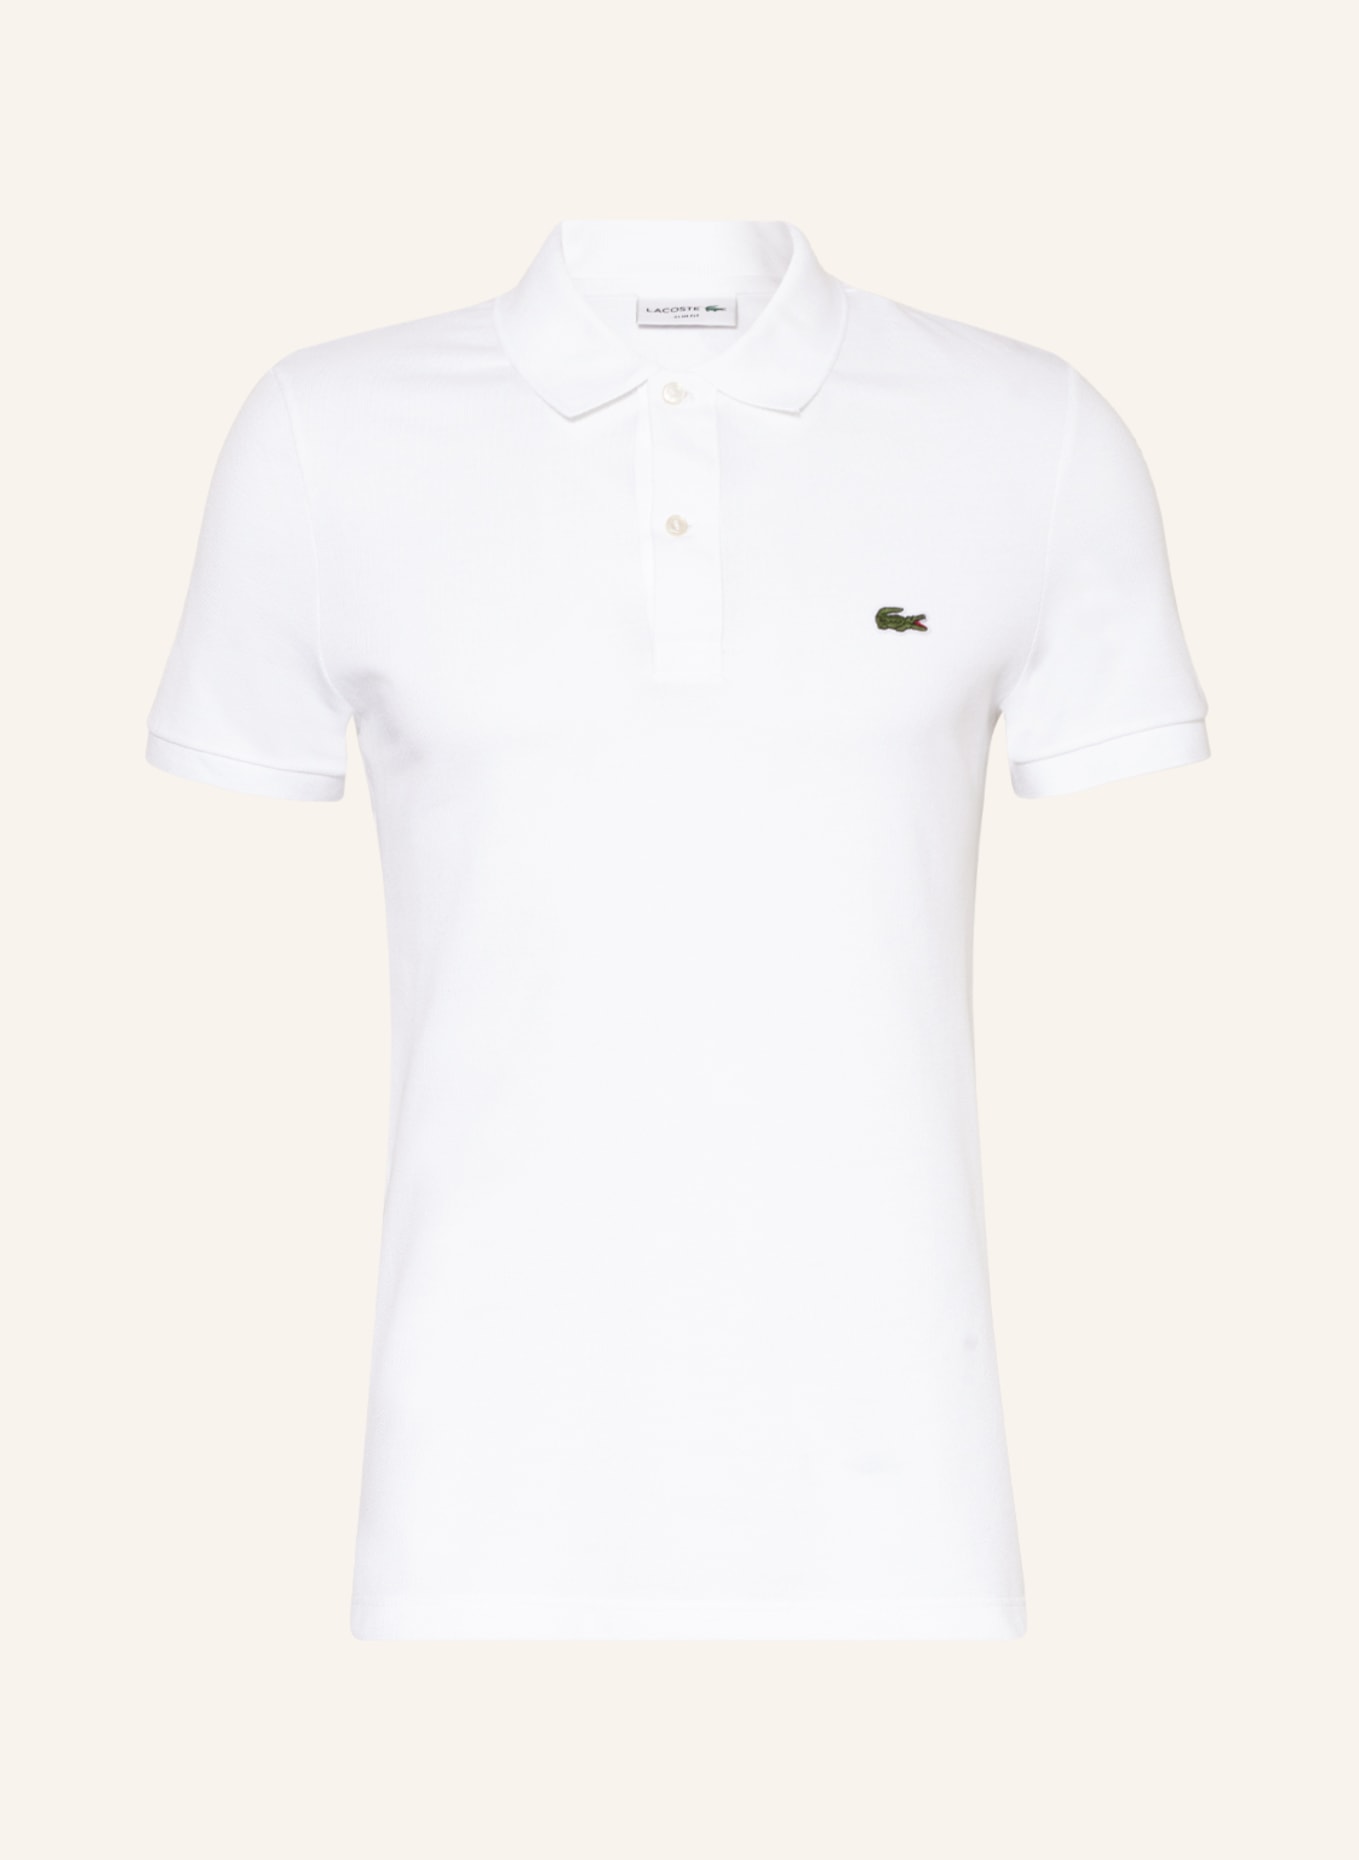 LACOSTE Piqué-Poloshirt Slim Fit, Farbe: WEISS (Bild 1)